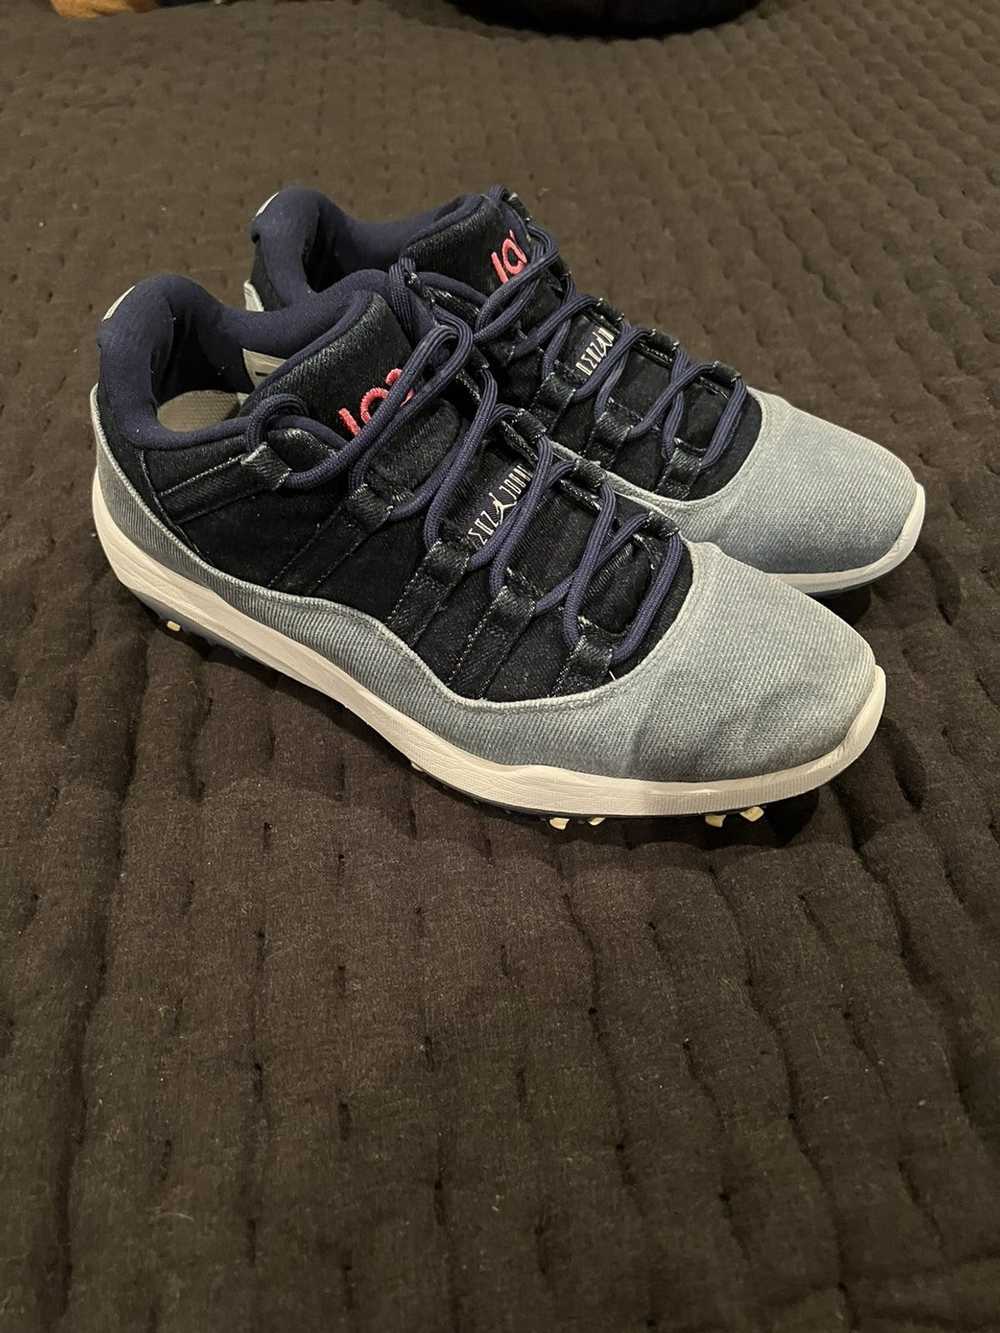 Jordan Brand Jordan 11 Golf “No Denim Allowed” - image 6